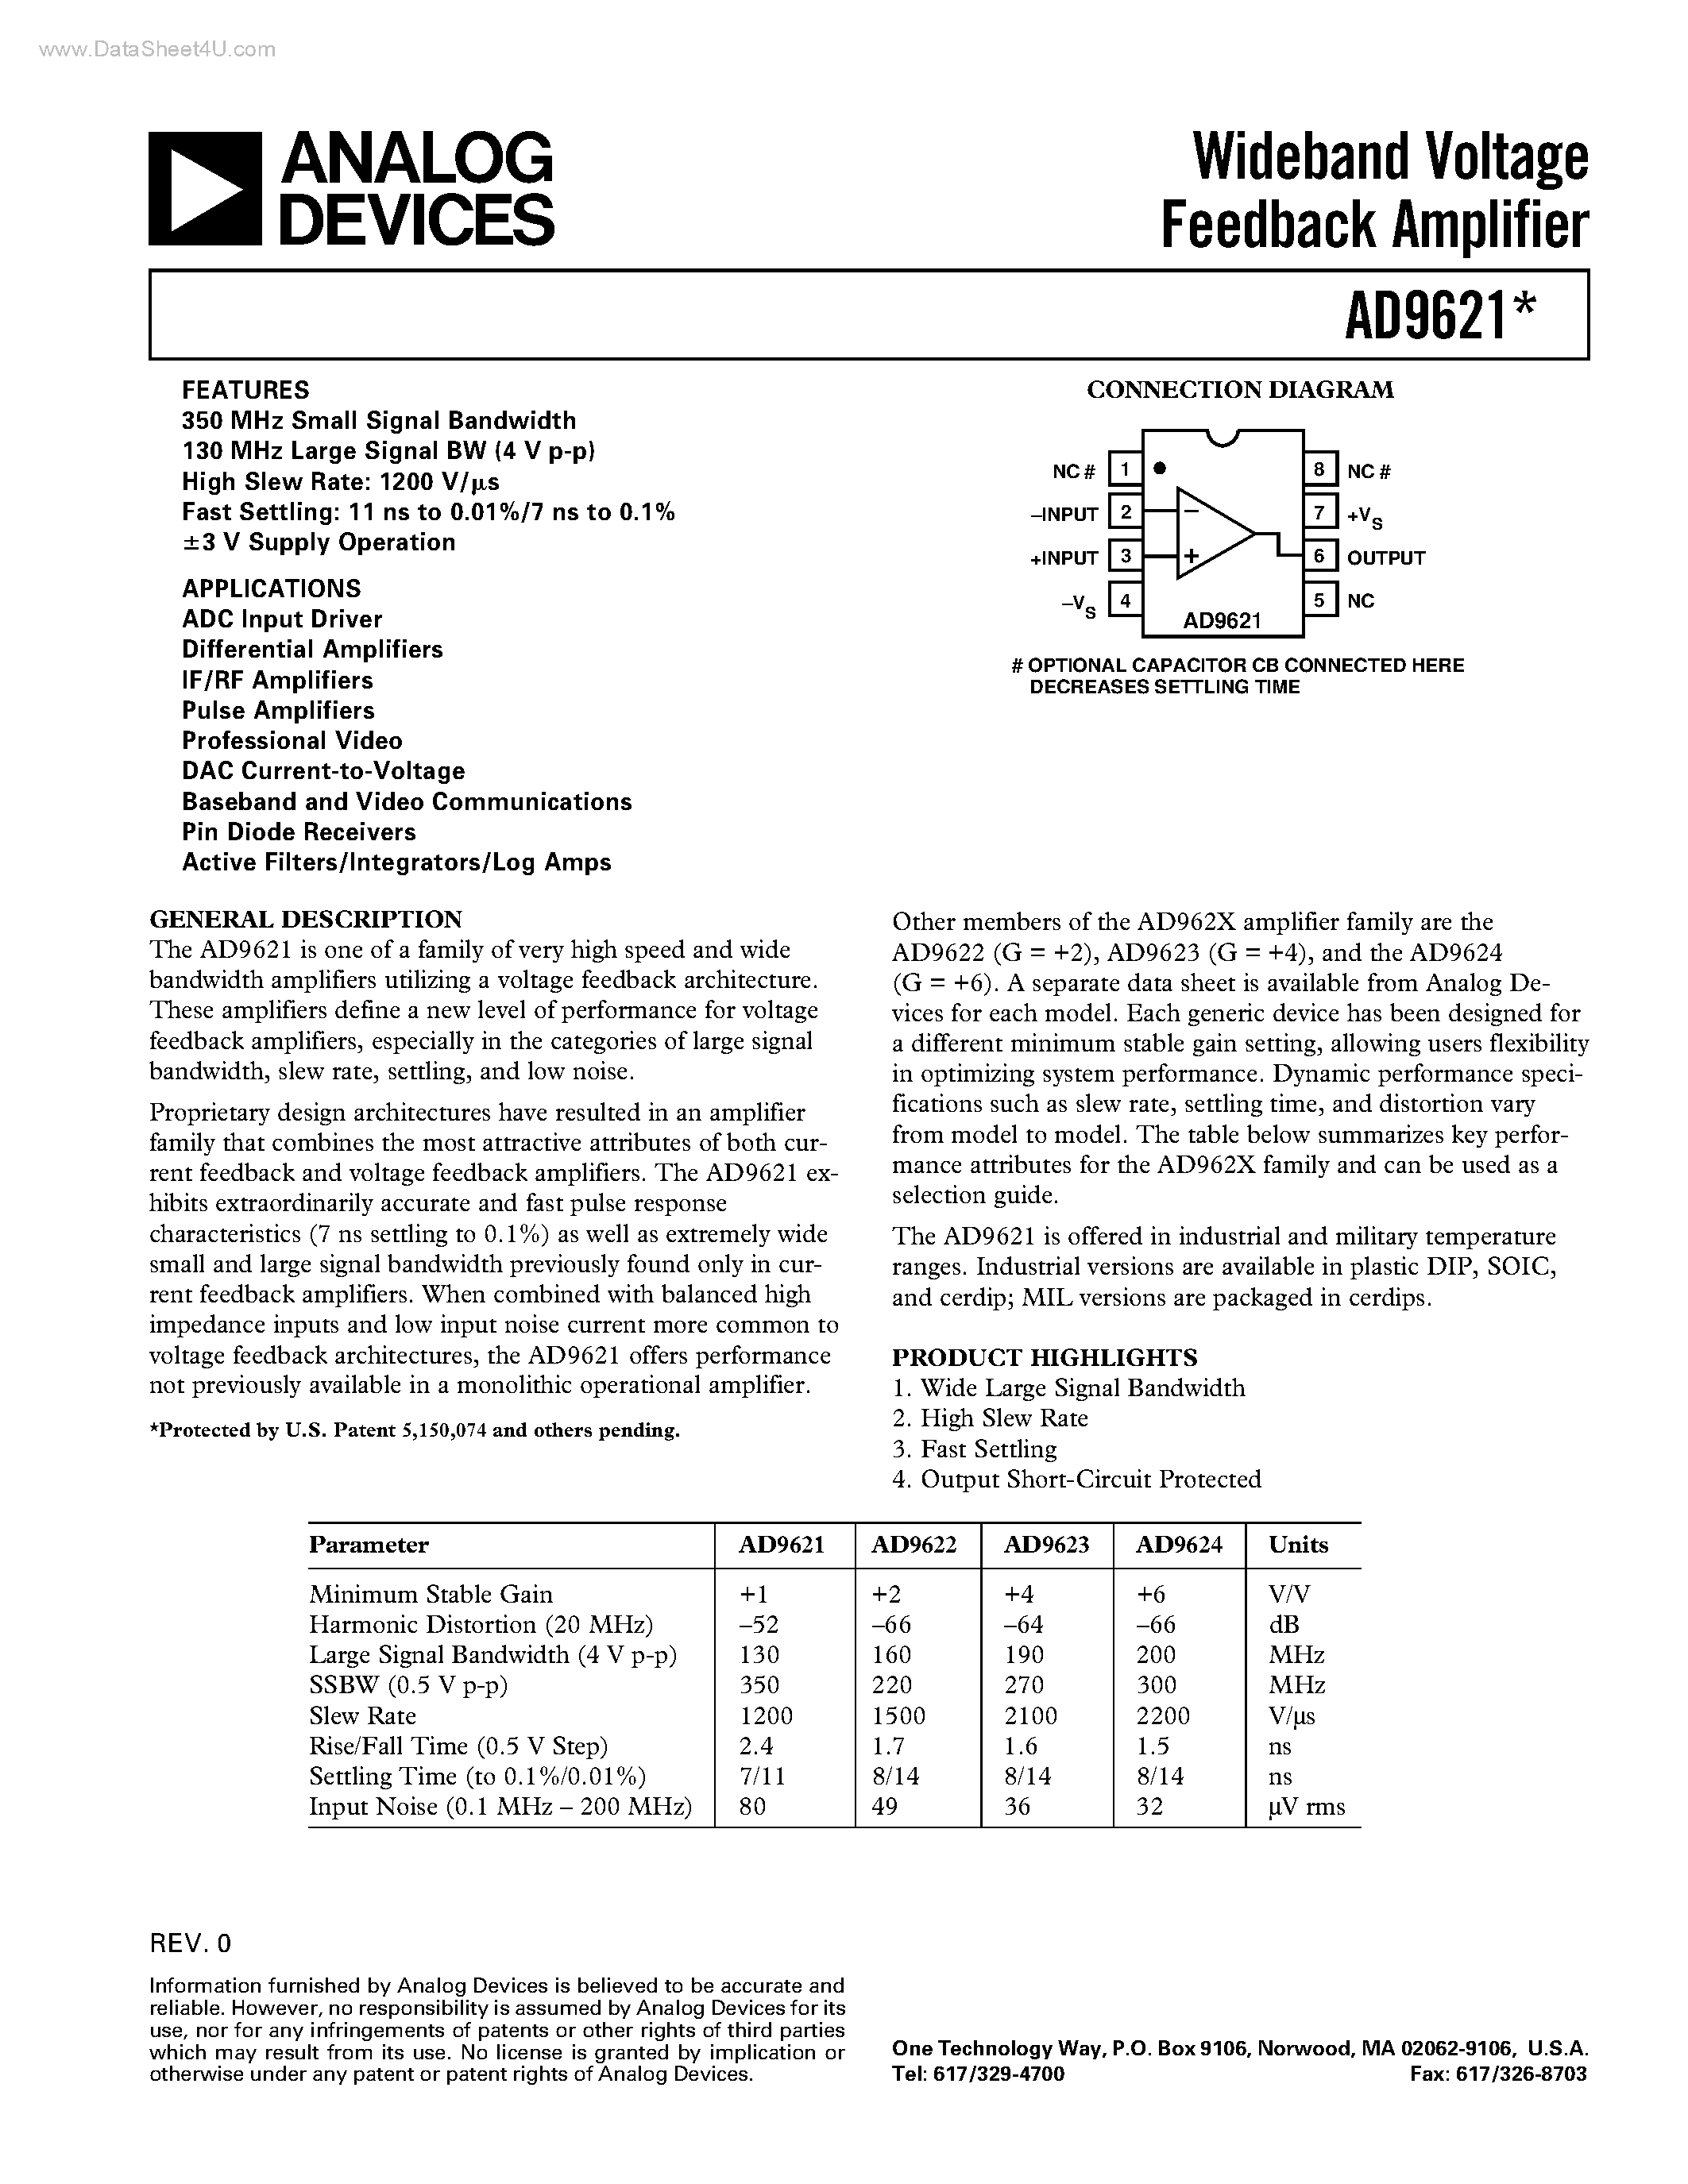 Даташит AD9621 - (AD9621 - AD9624) Wideband Voltage Feedback Amplifier страница 1